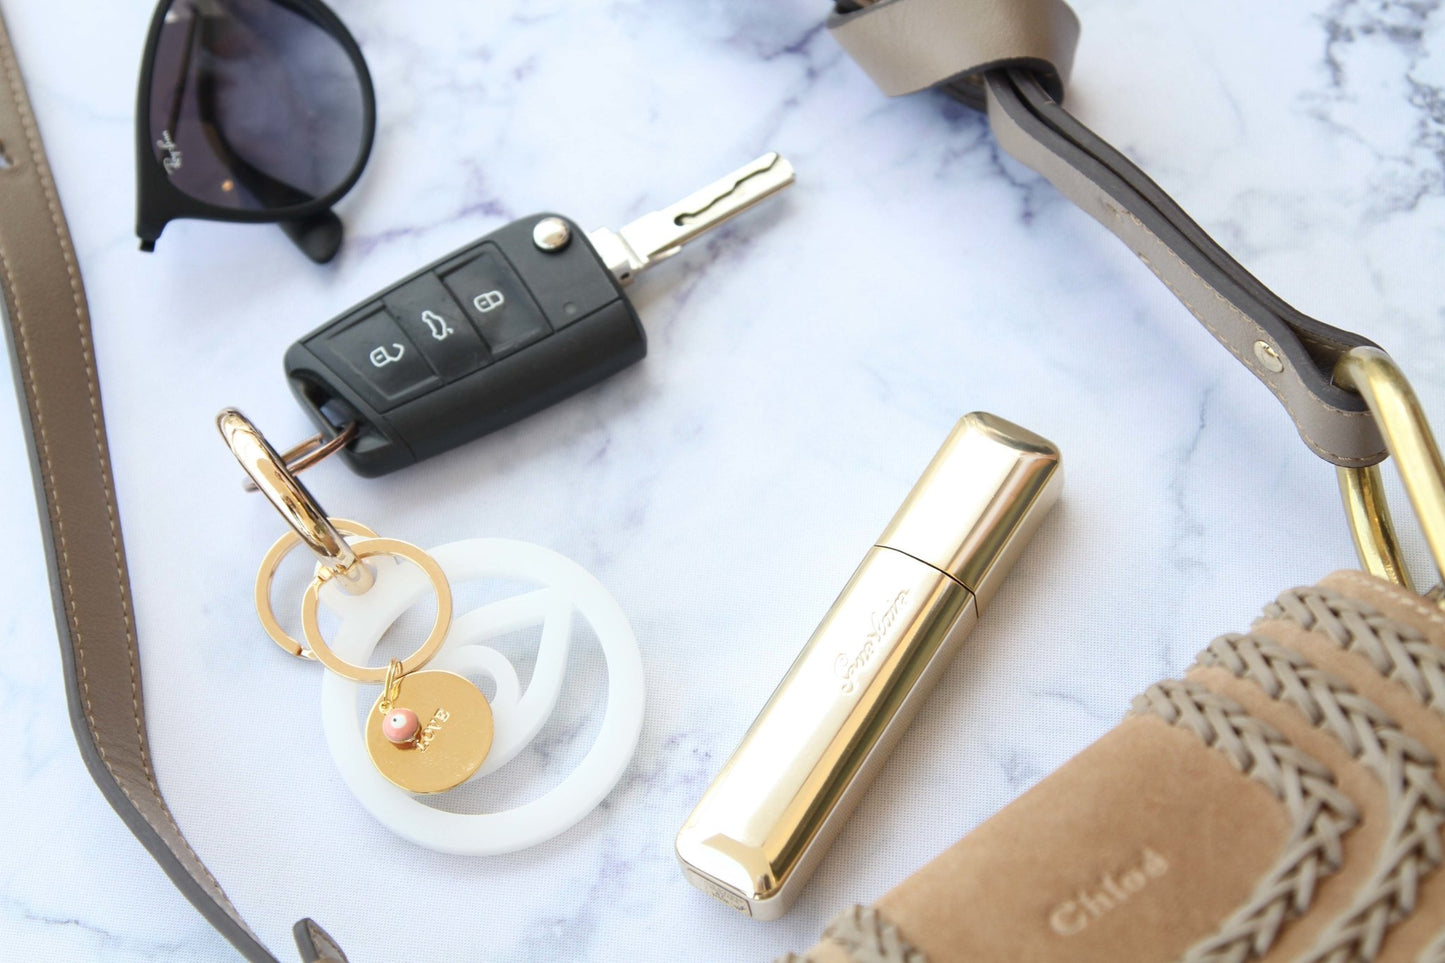 White elegant Evil eye key holder with Gold plated key holder - stylish luck home decor